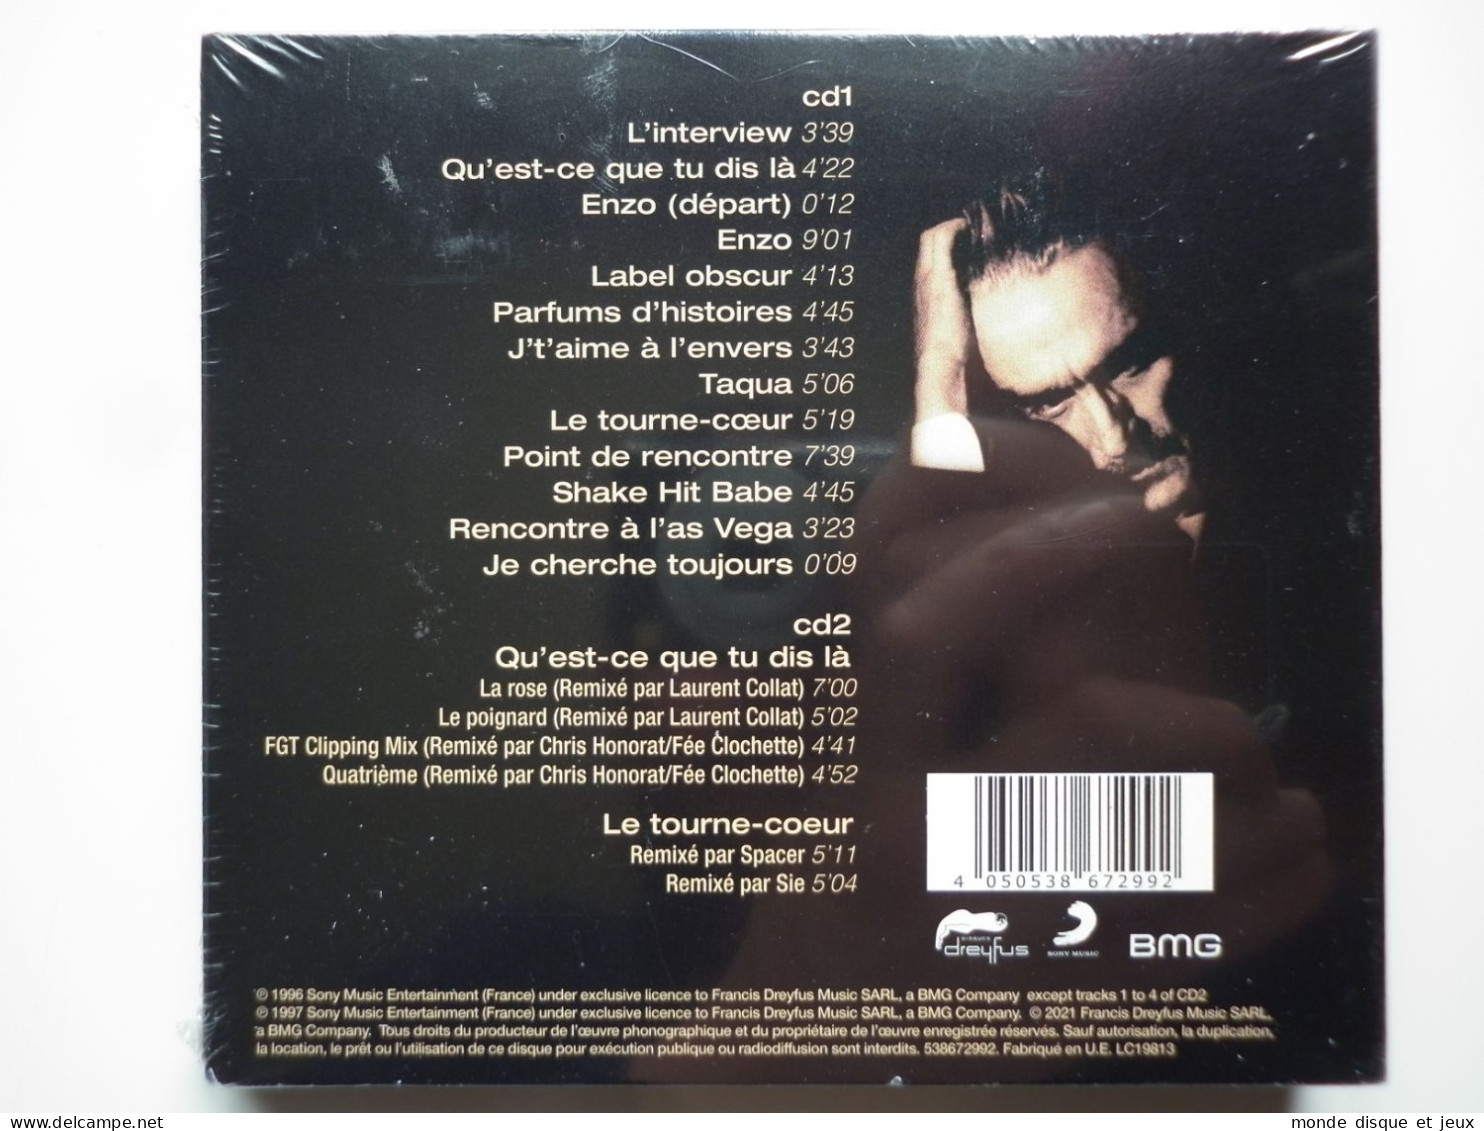 Christophe Double Cd Album Digipack Bevilacqua Edition 25 Ans - Altri - Francese